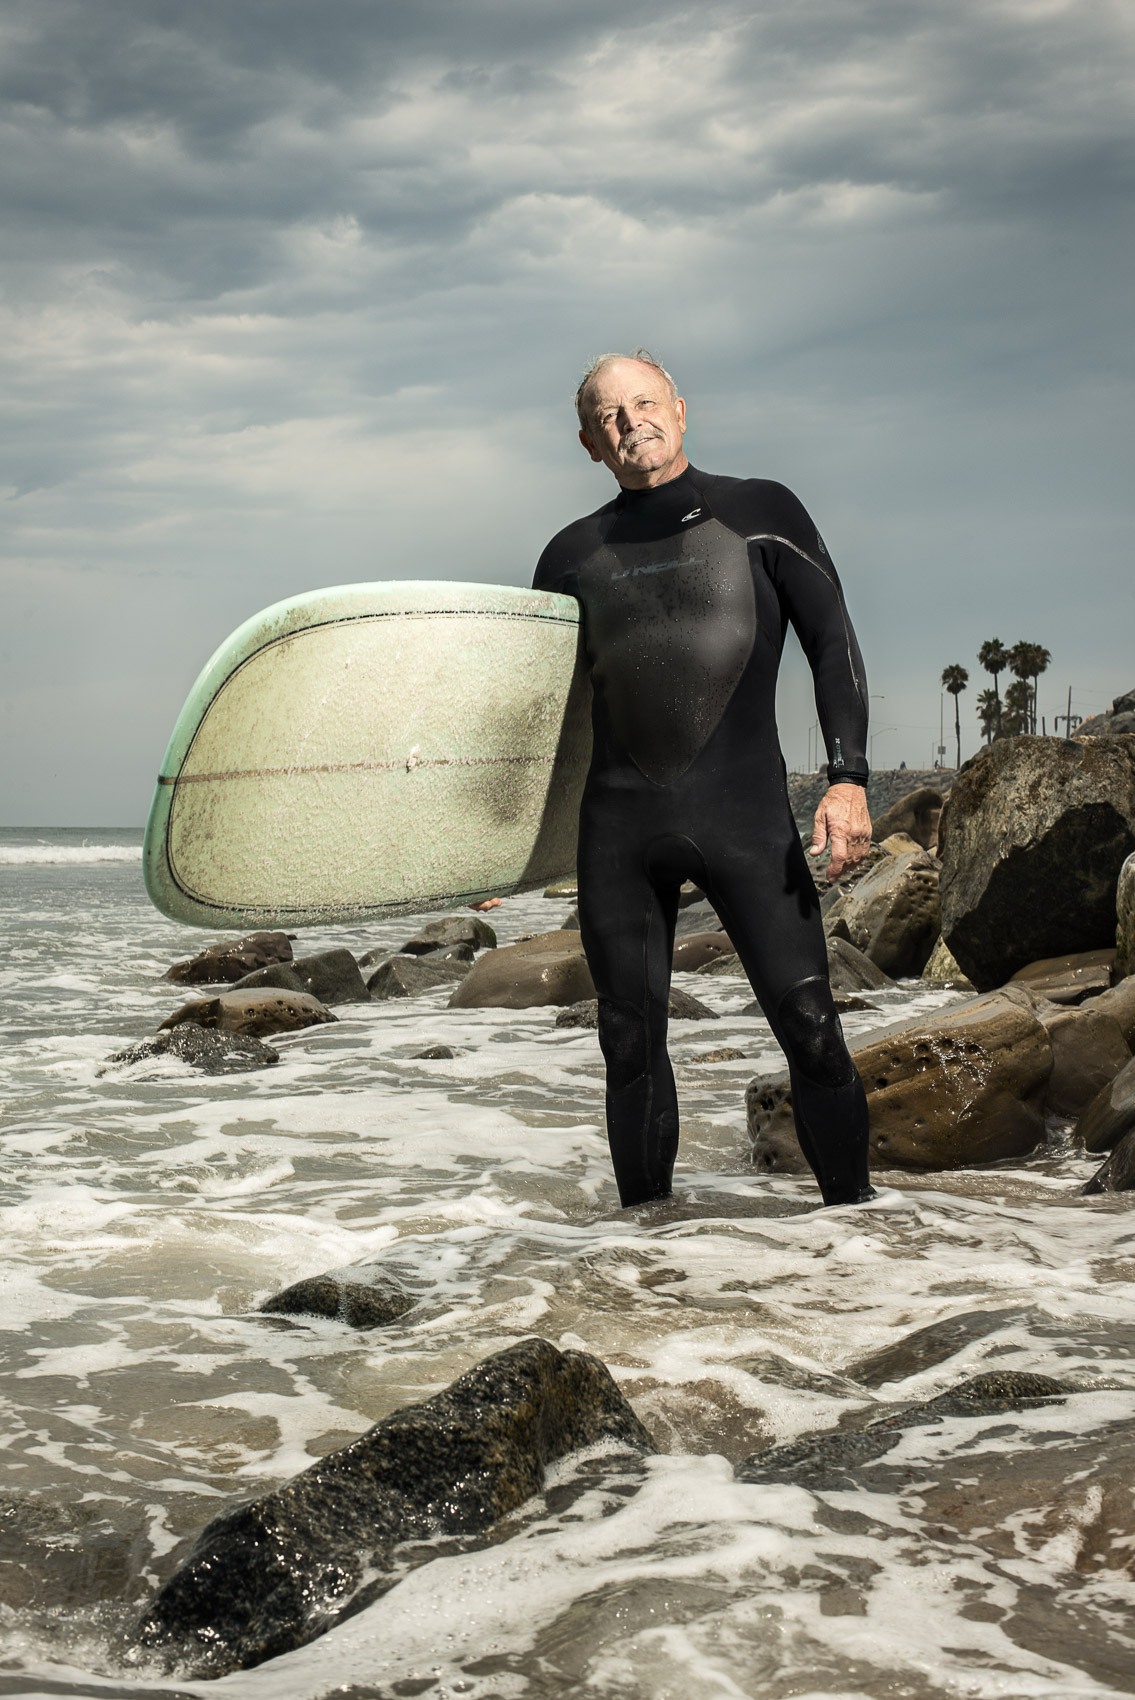 An older surfer portrait in Malibu, Calif.